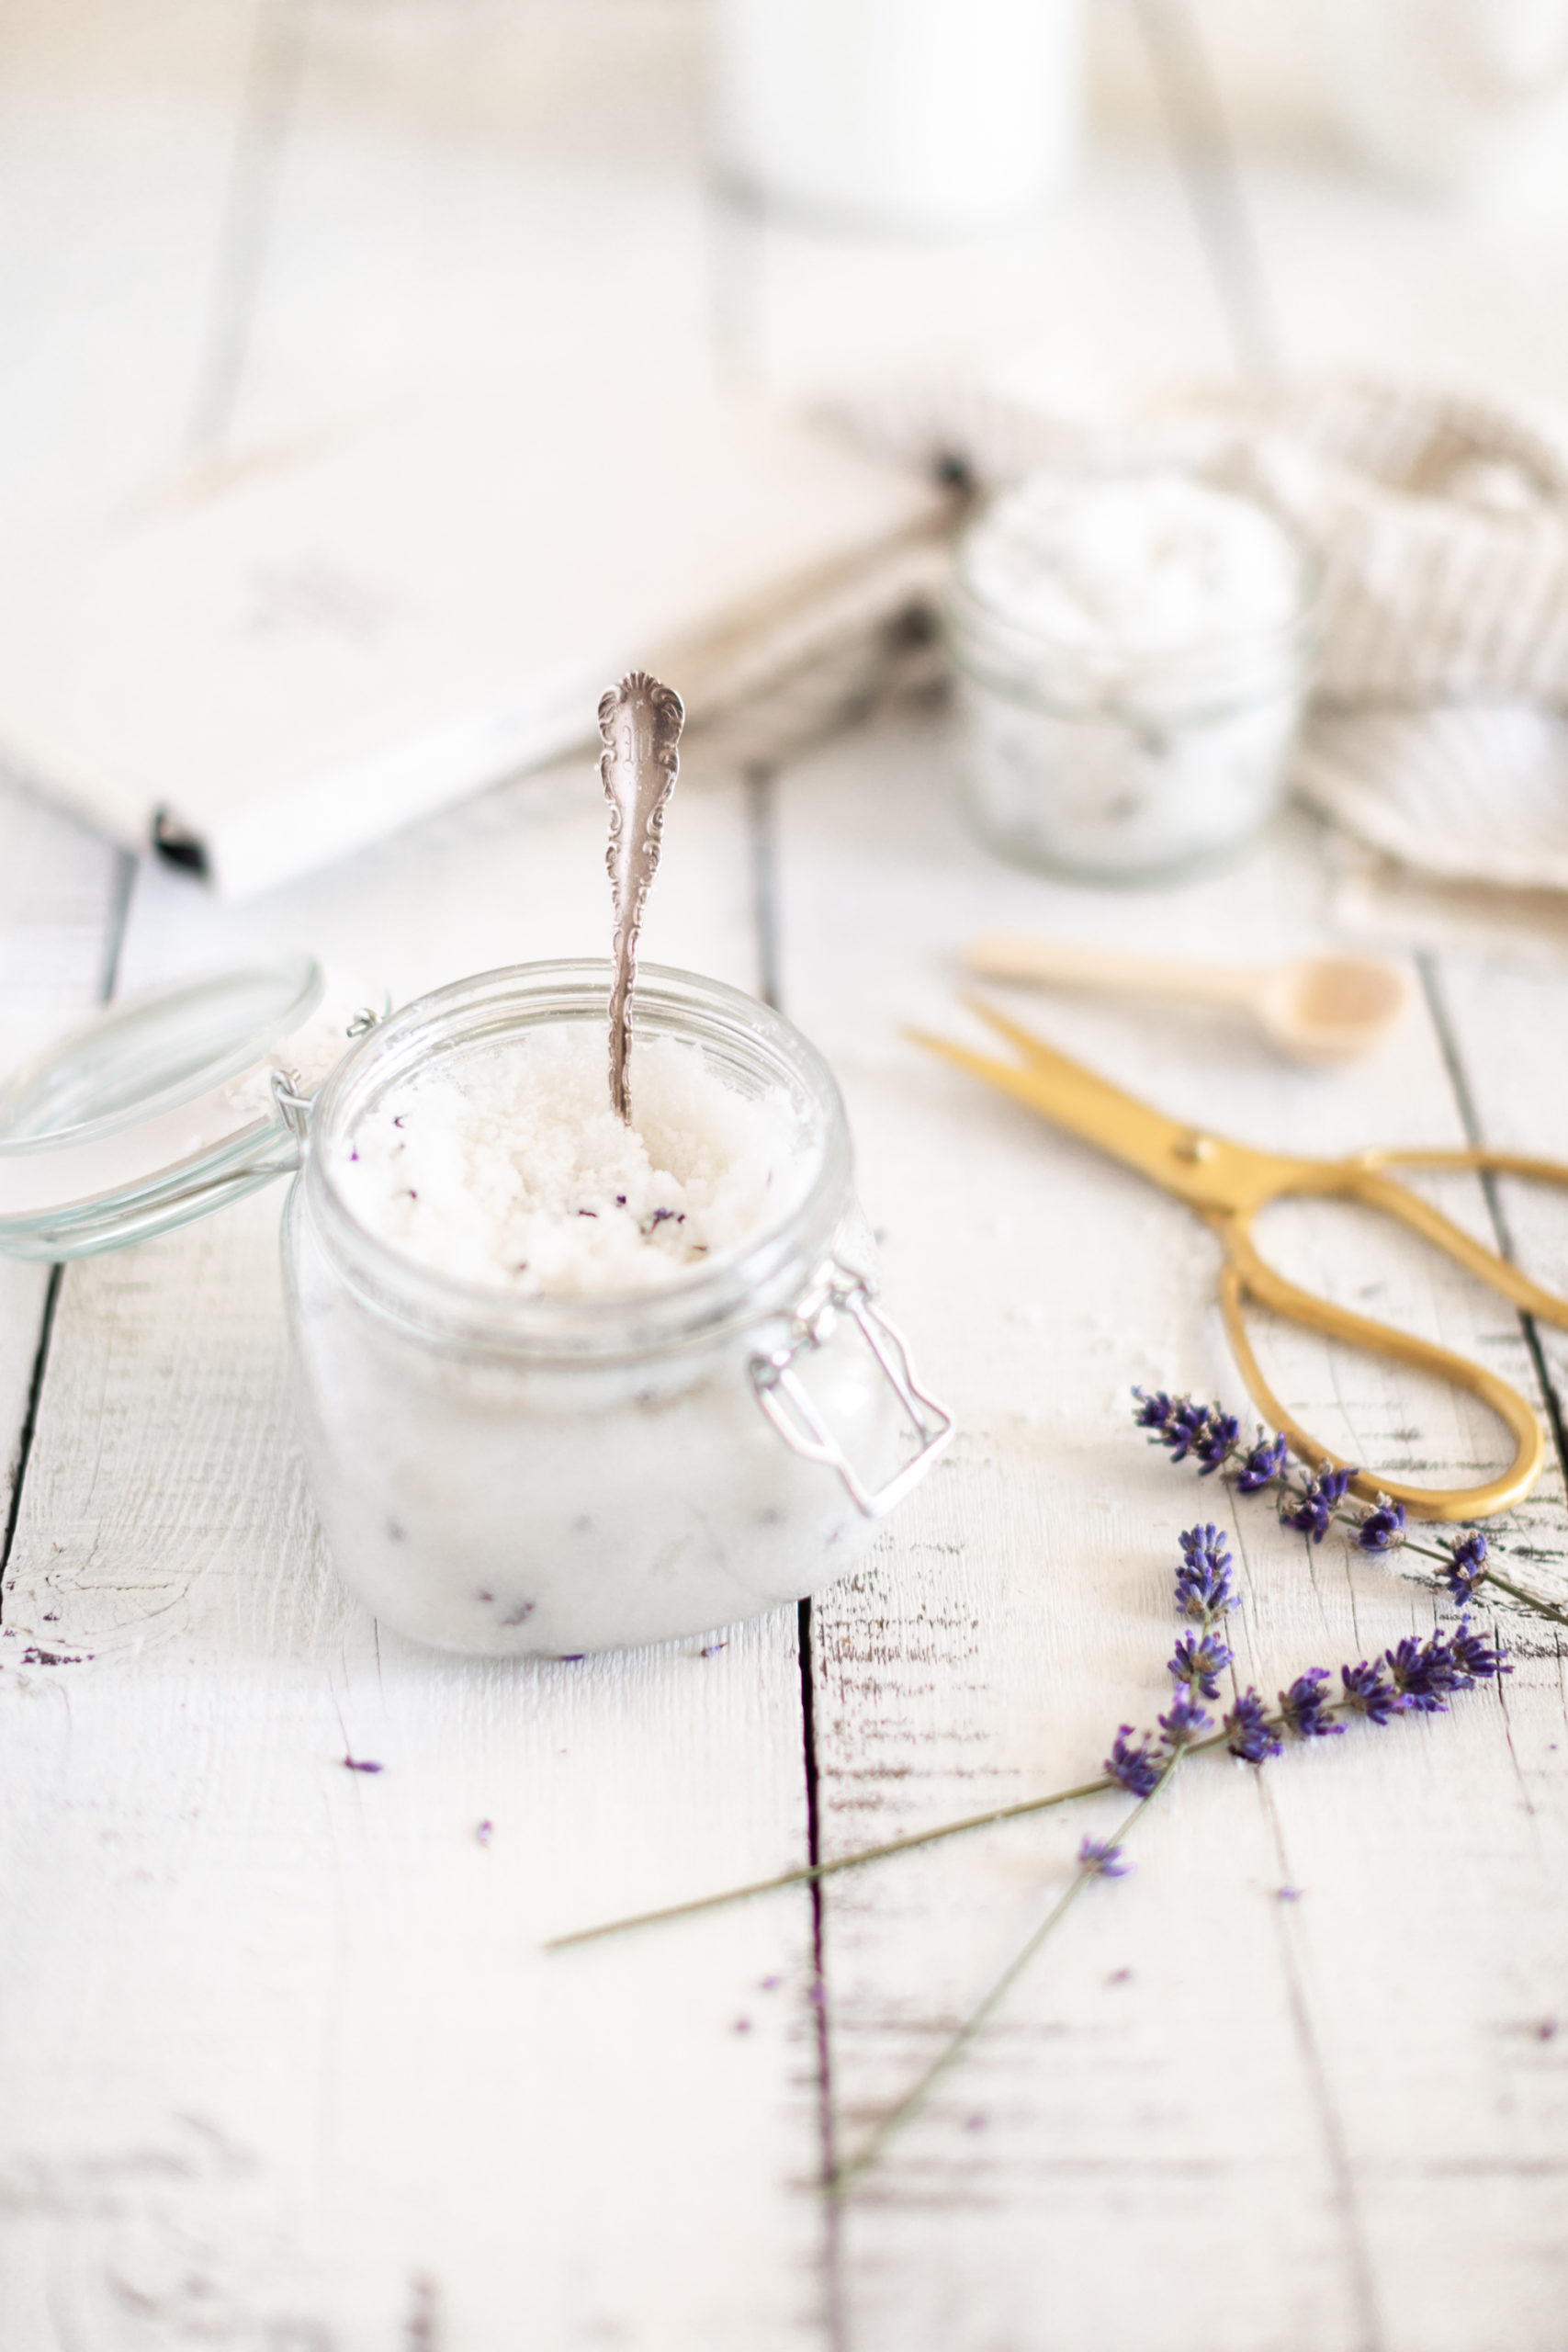 Homemade Lavender Foot Scrub Recipe